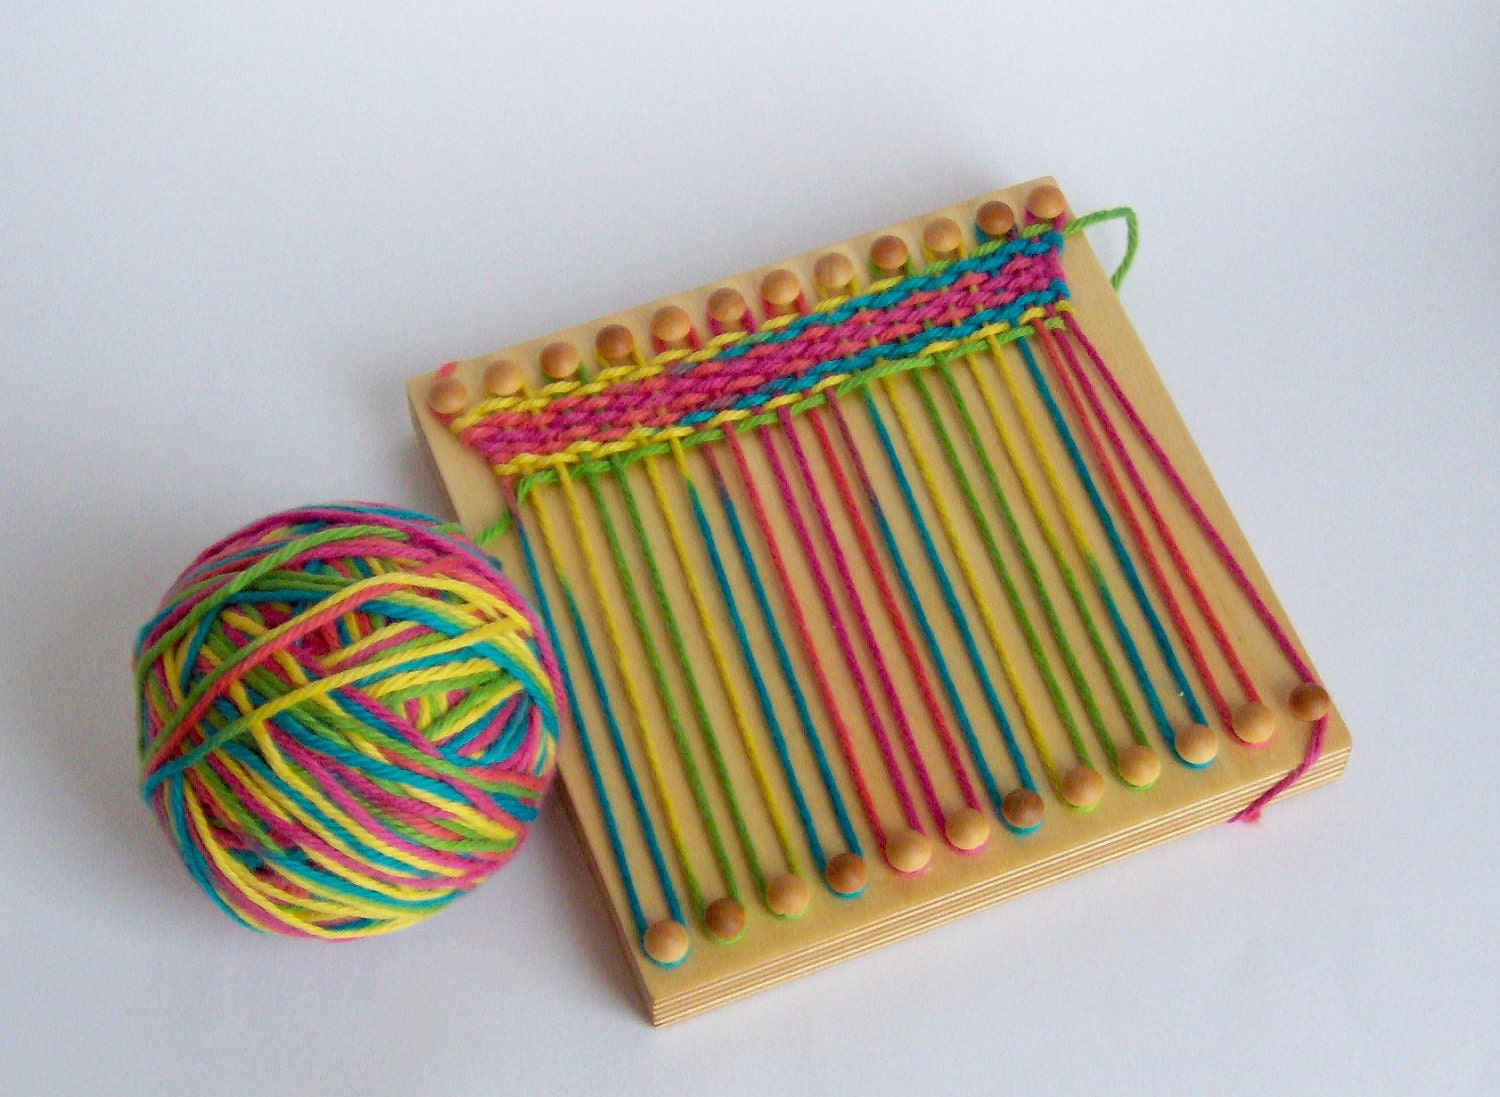 Wood weaving loom for kids crafts / fine motor wood toy